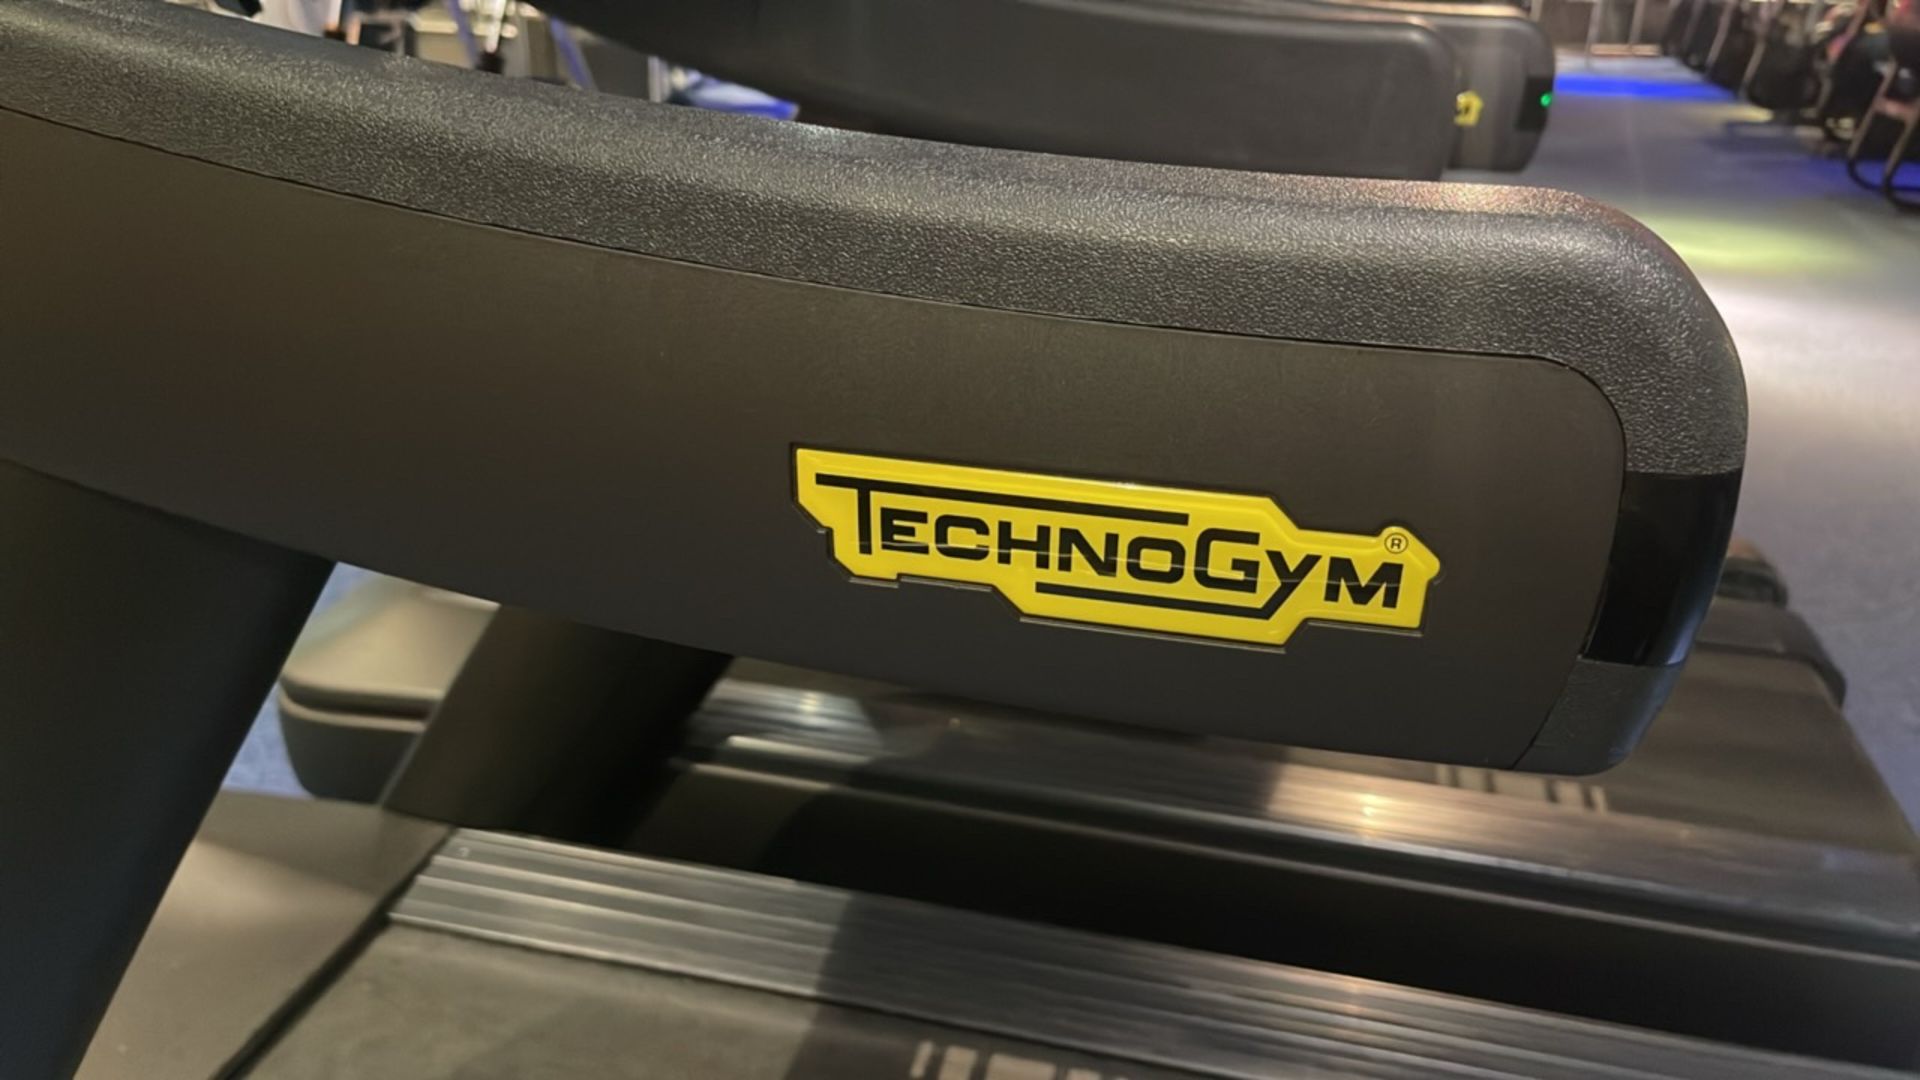 Technogym Treadmill 1000 - Bild 2 aus 6